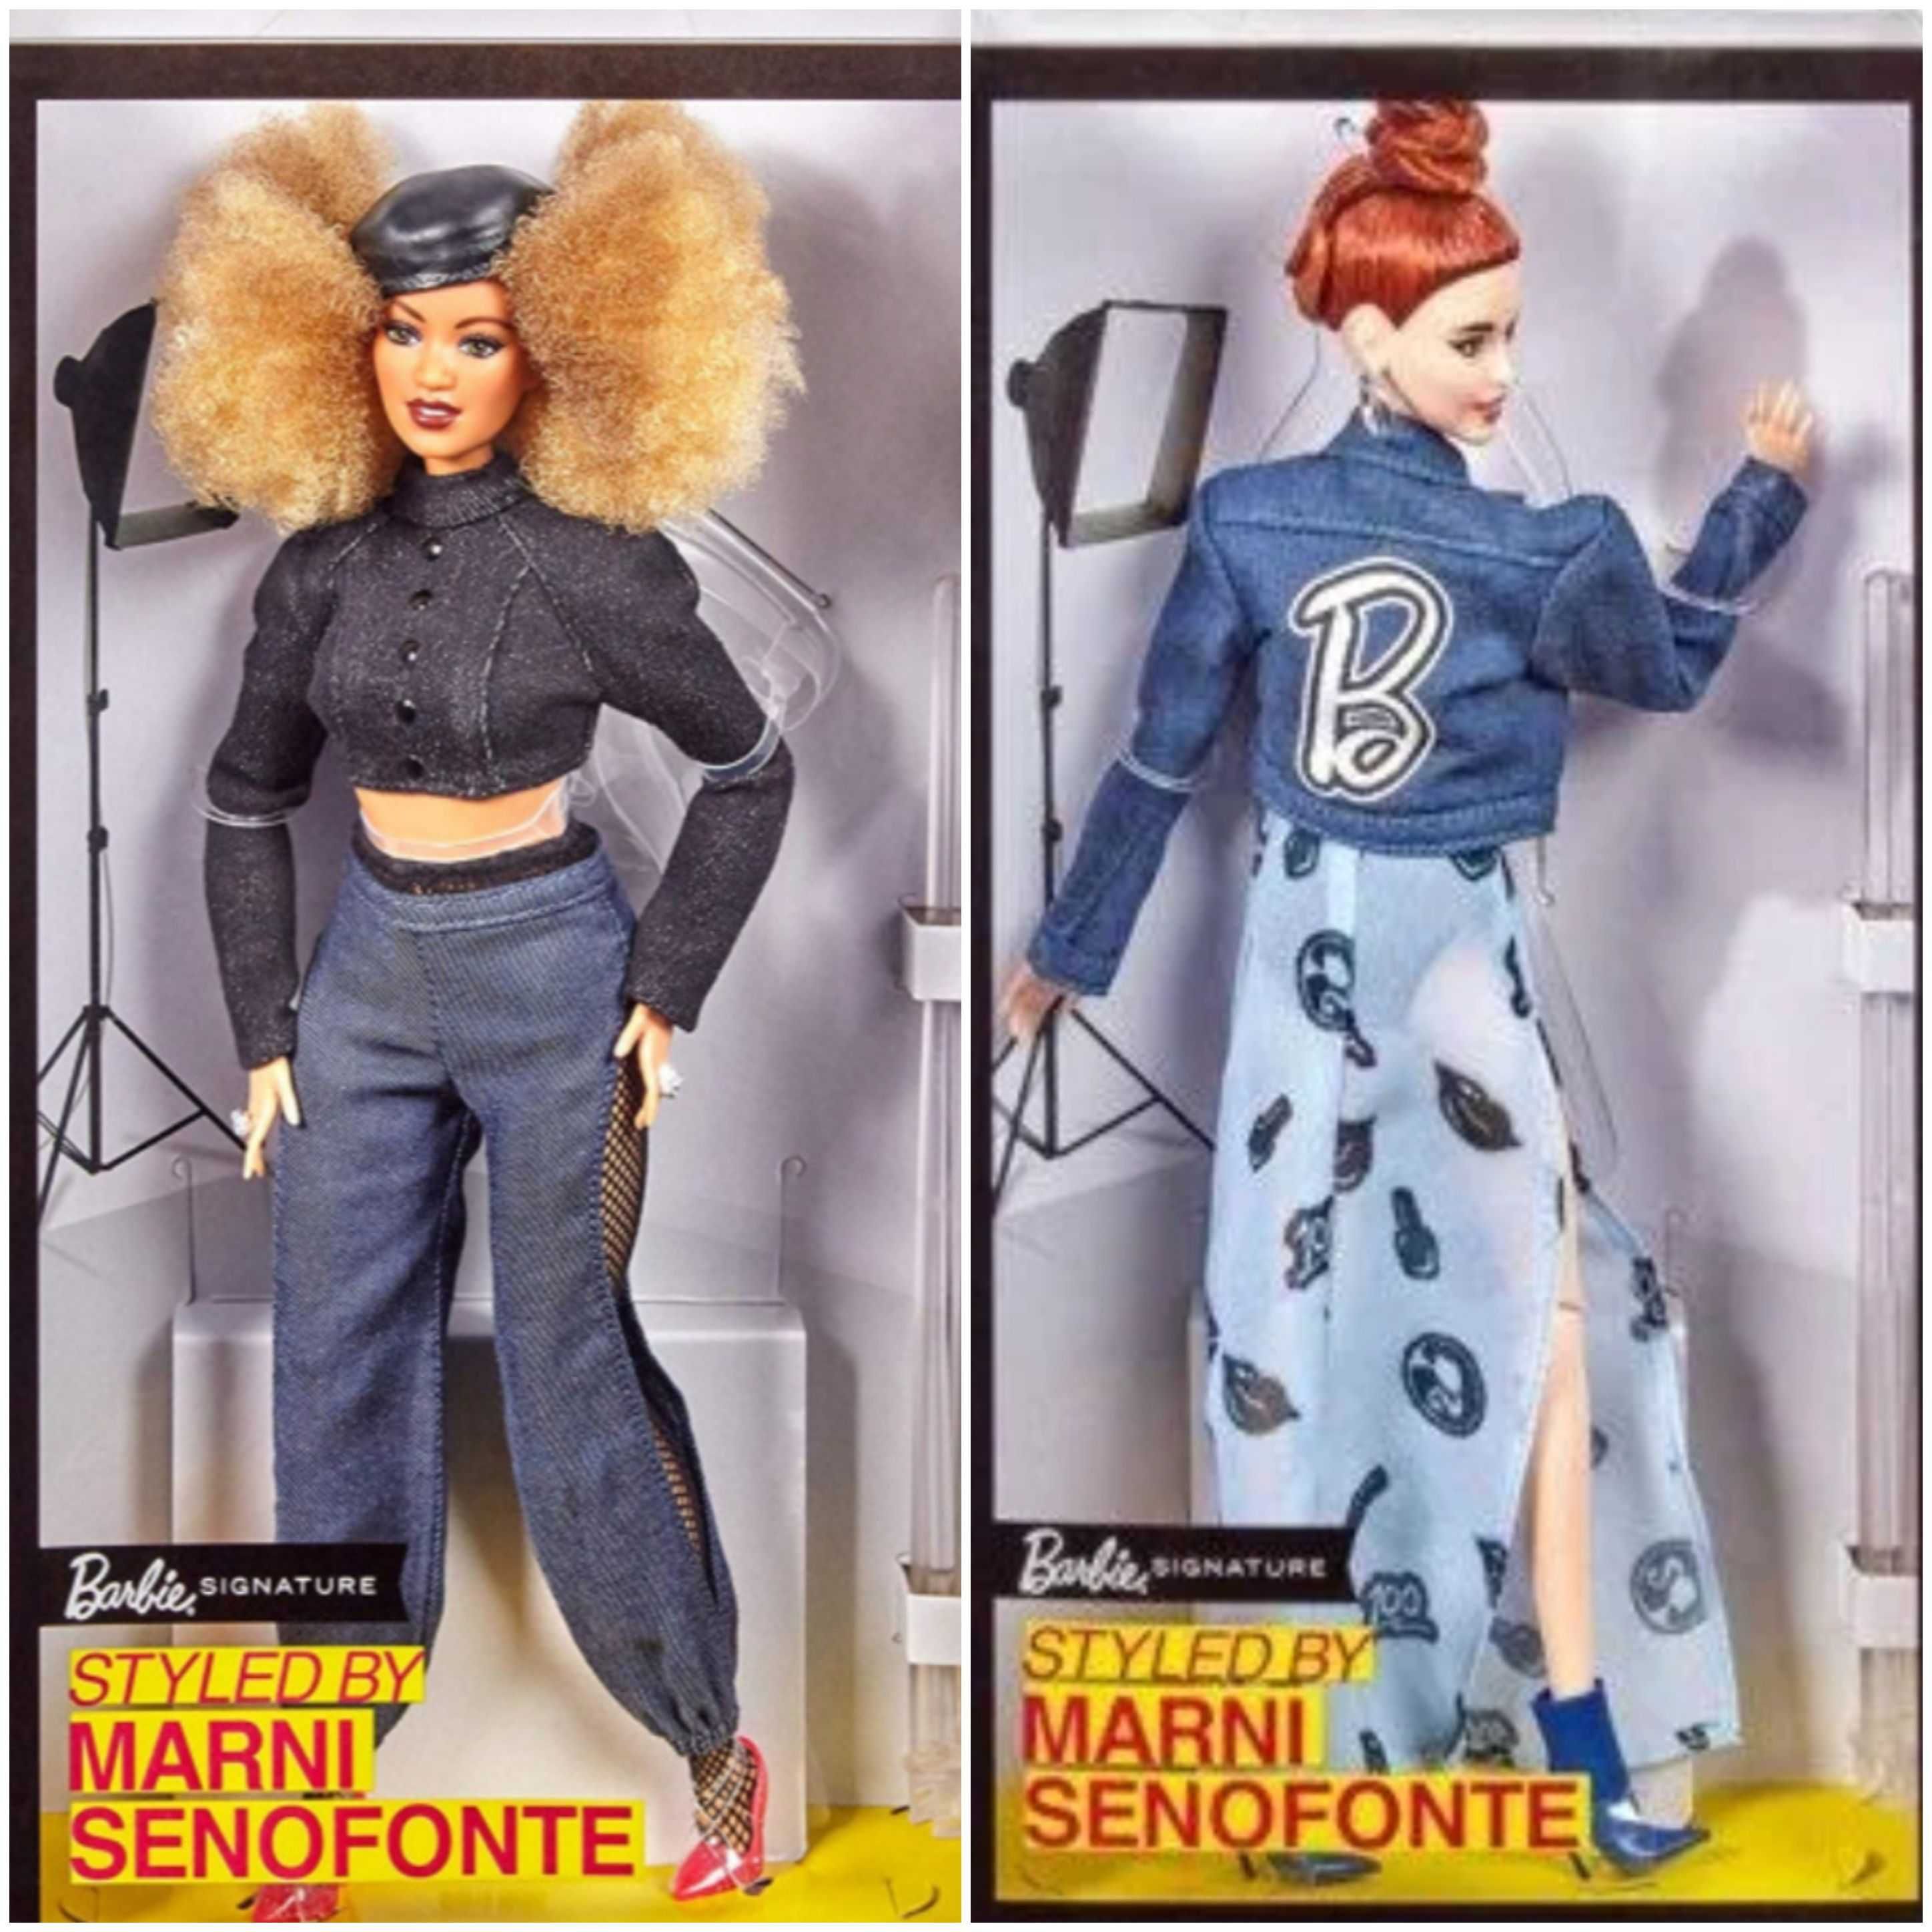 Пара 2 куклы!Барби Barbie Styled by Marni Senofonte